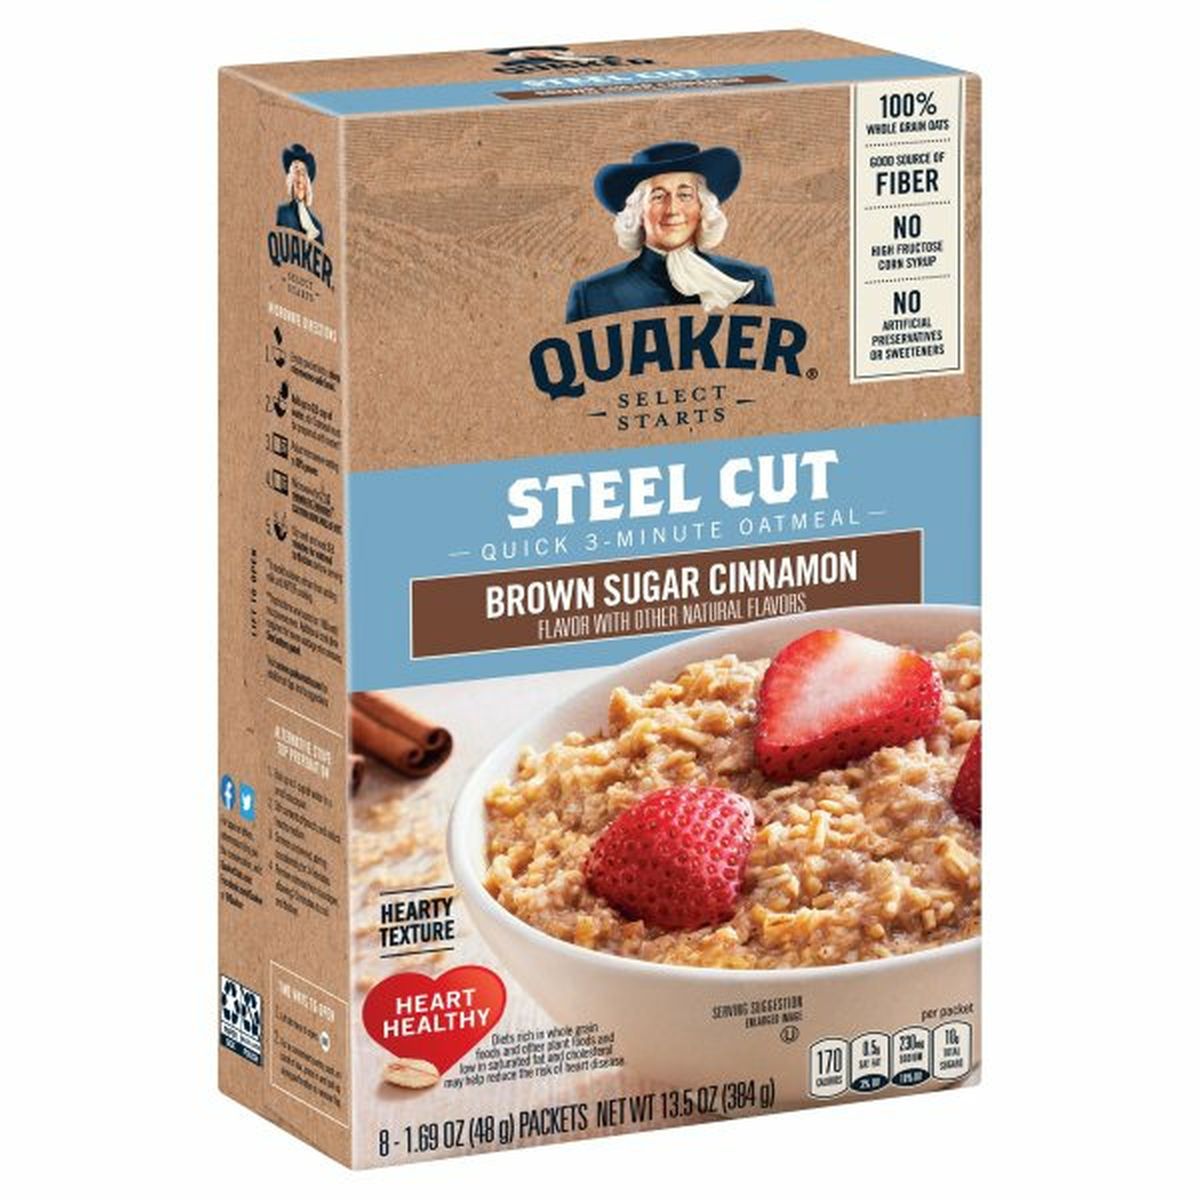 Calories in Quaker Steel Cut Oatmeal, Brown Sugar Cinnamon